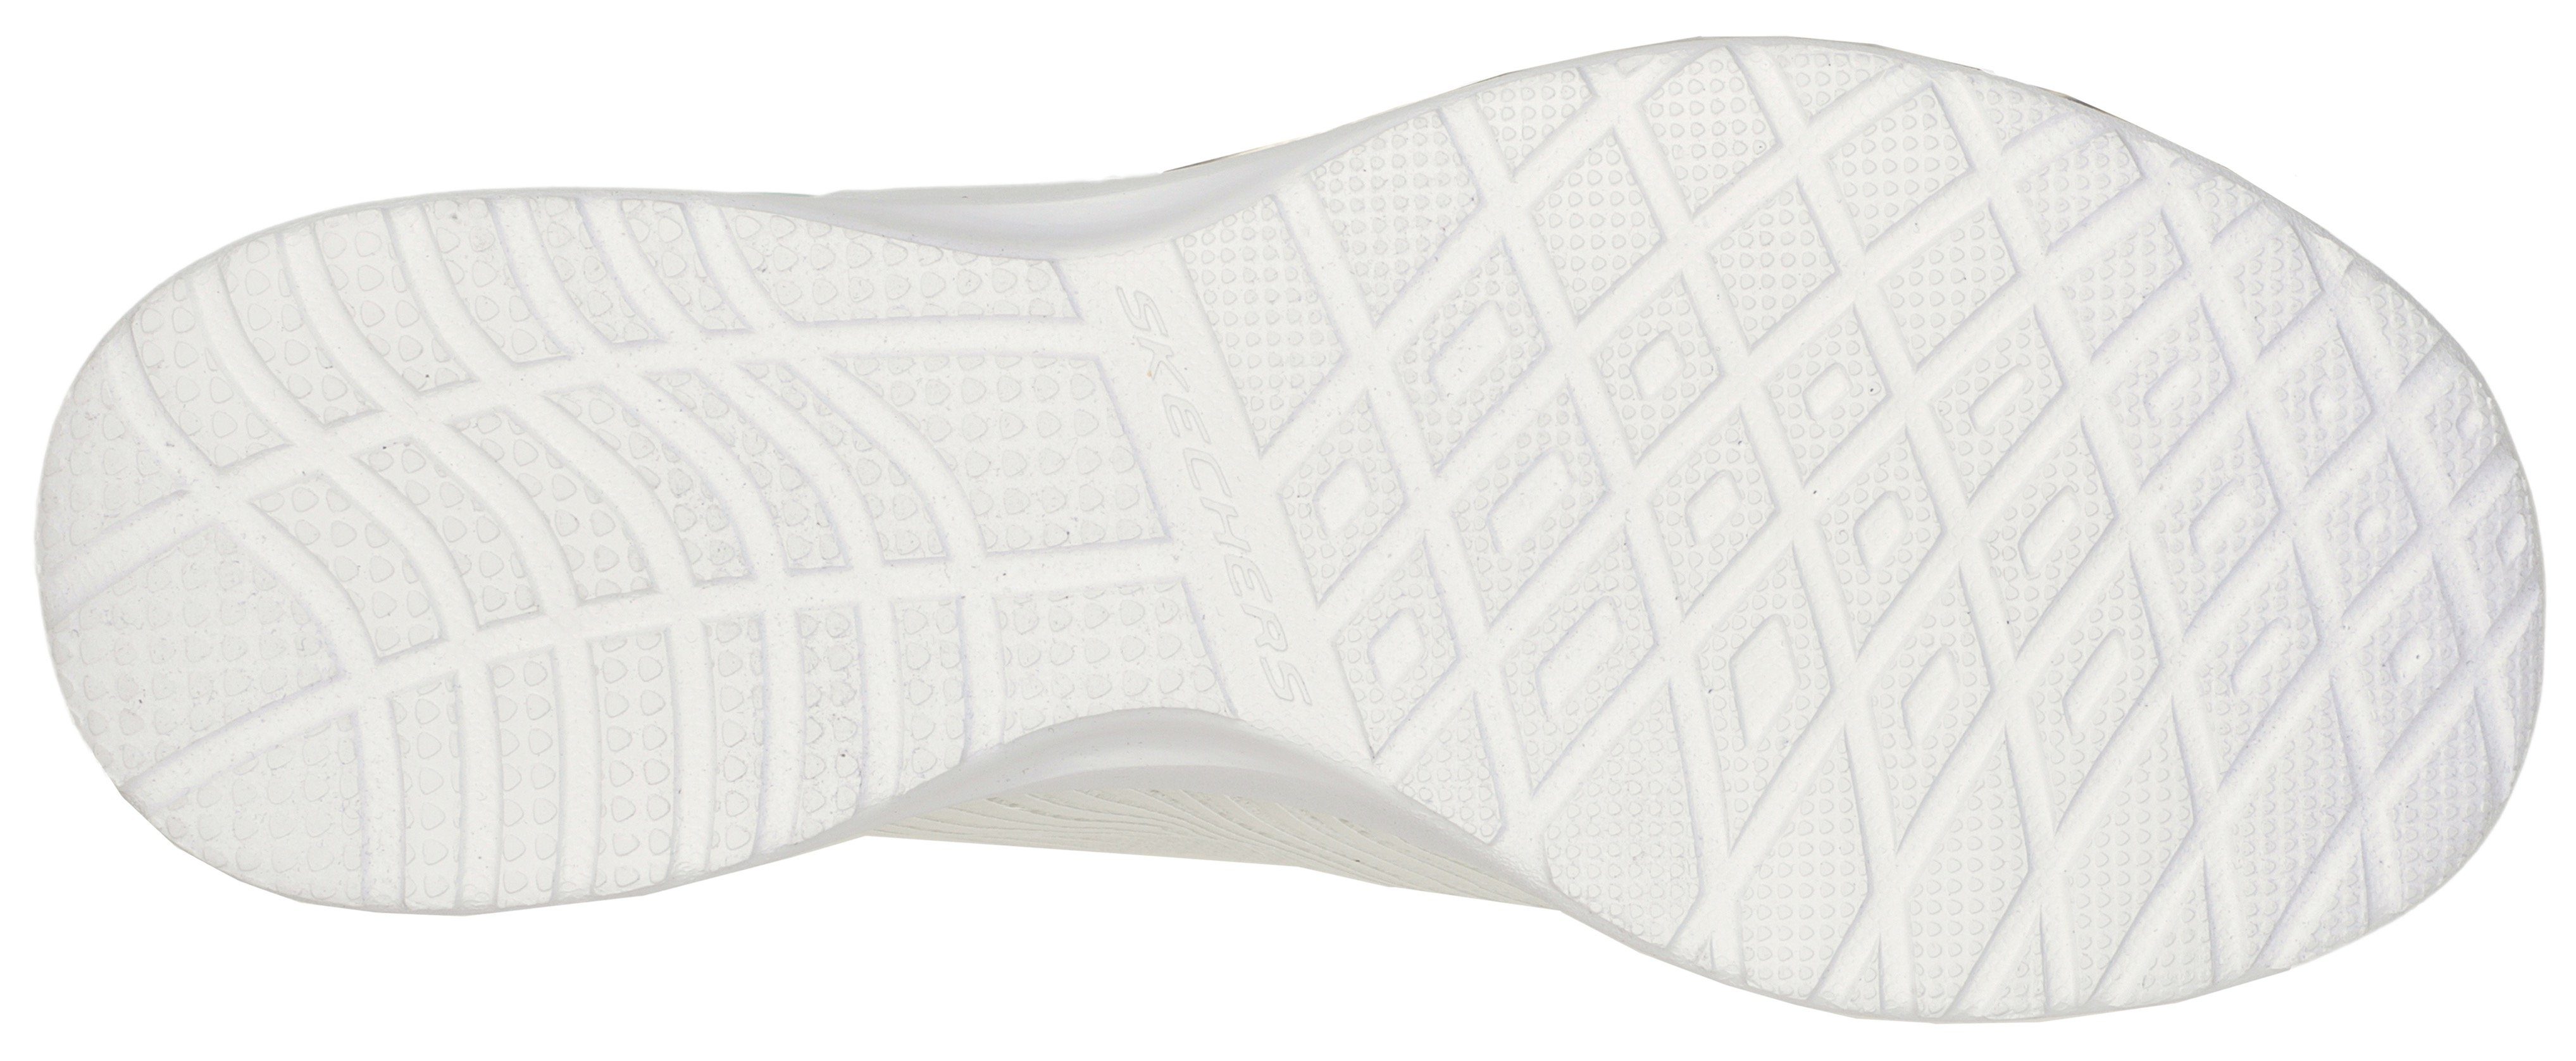 DYNAMIGHT Foam LUMINOSITY Ausstattung Sneaker SKECH-AIR weiß-mint mit Memory Skechers